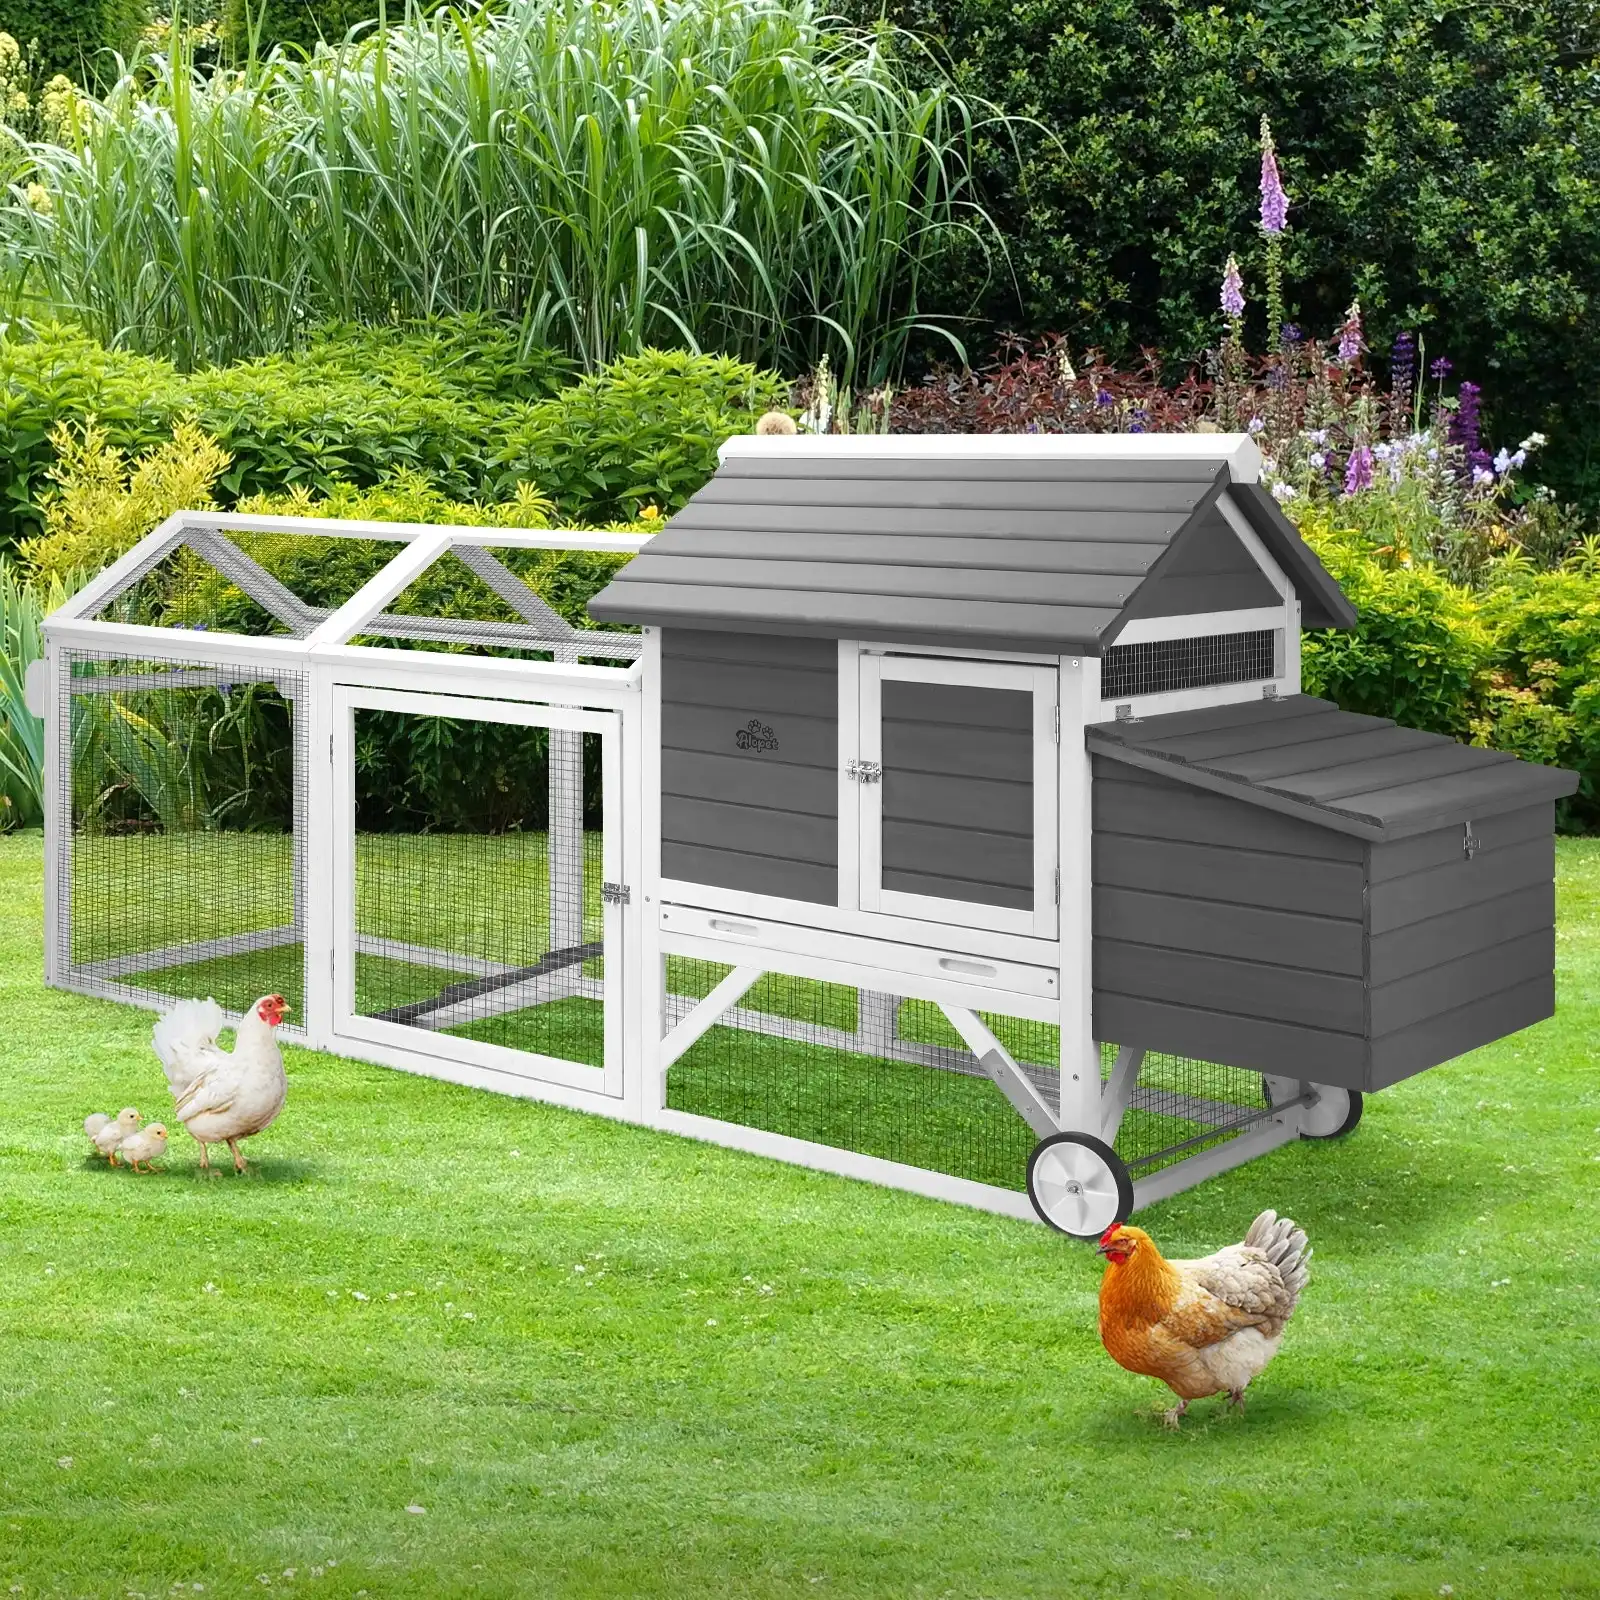 Alopet Chicken Coop Rabbit Hutch Extra Large Wooden House Run Hatch Box w/Wheels